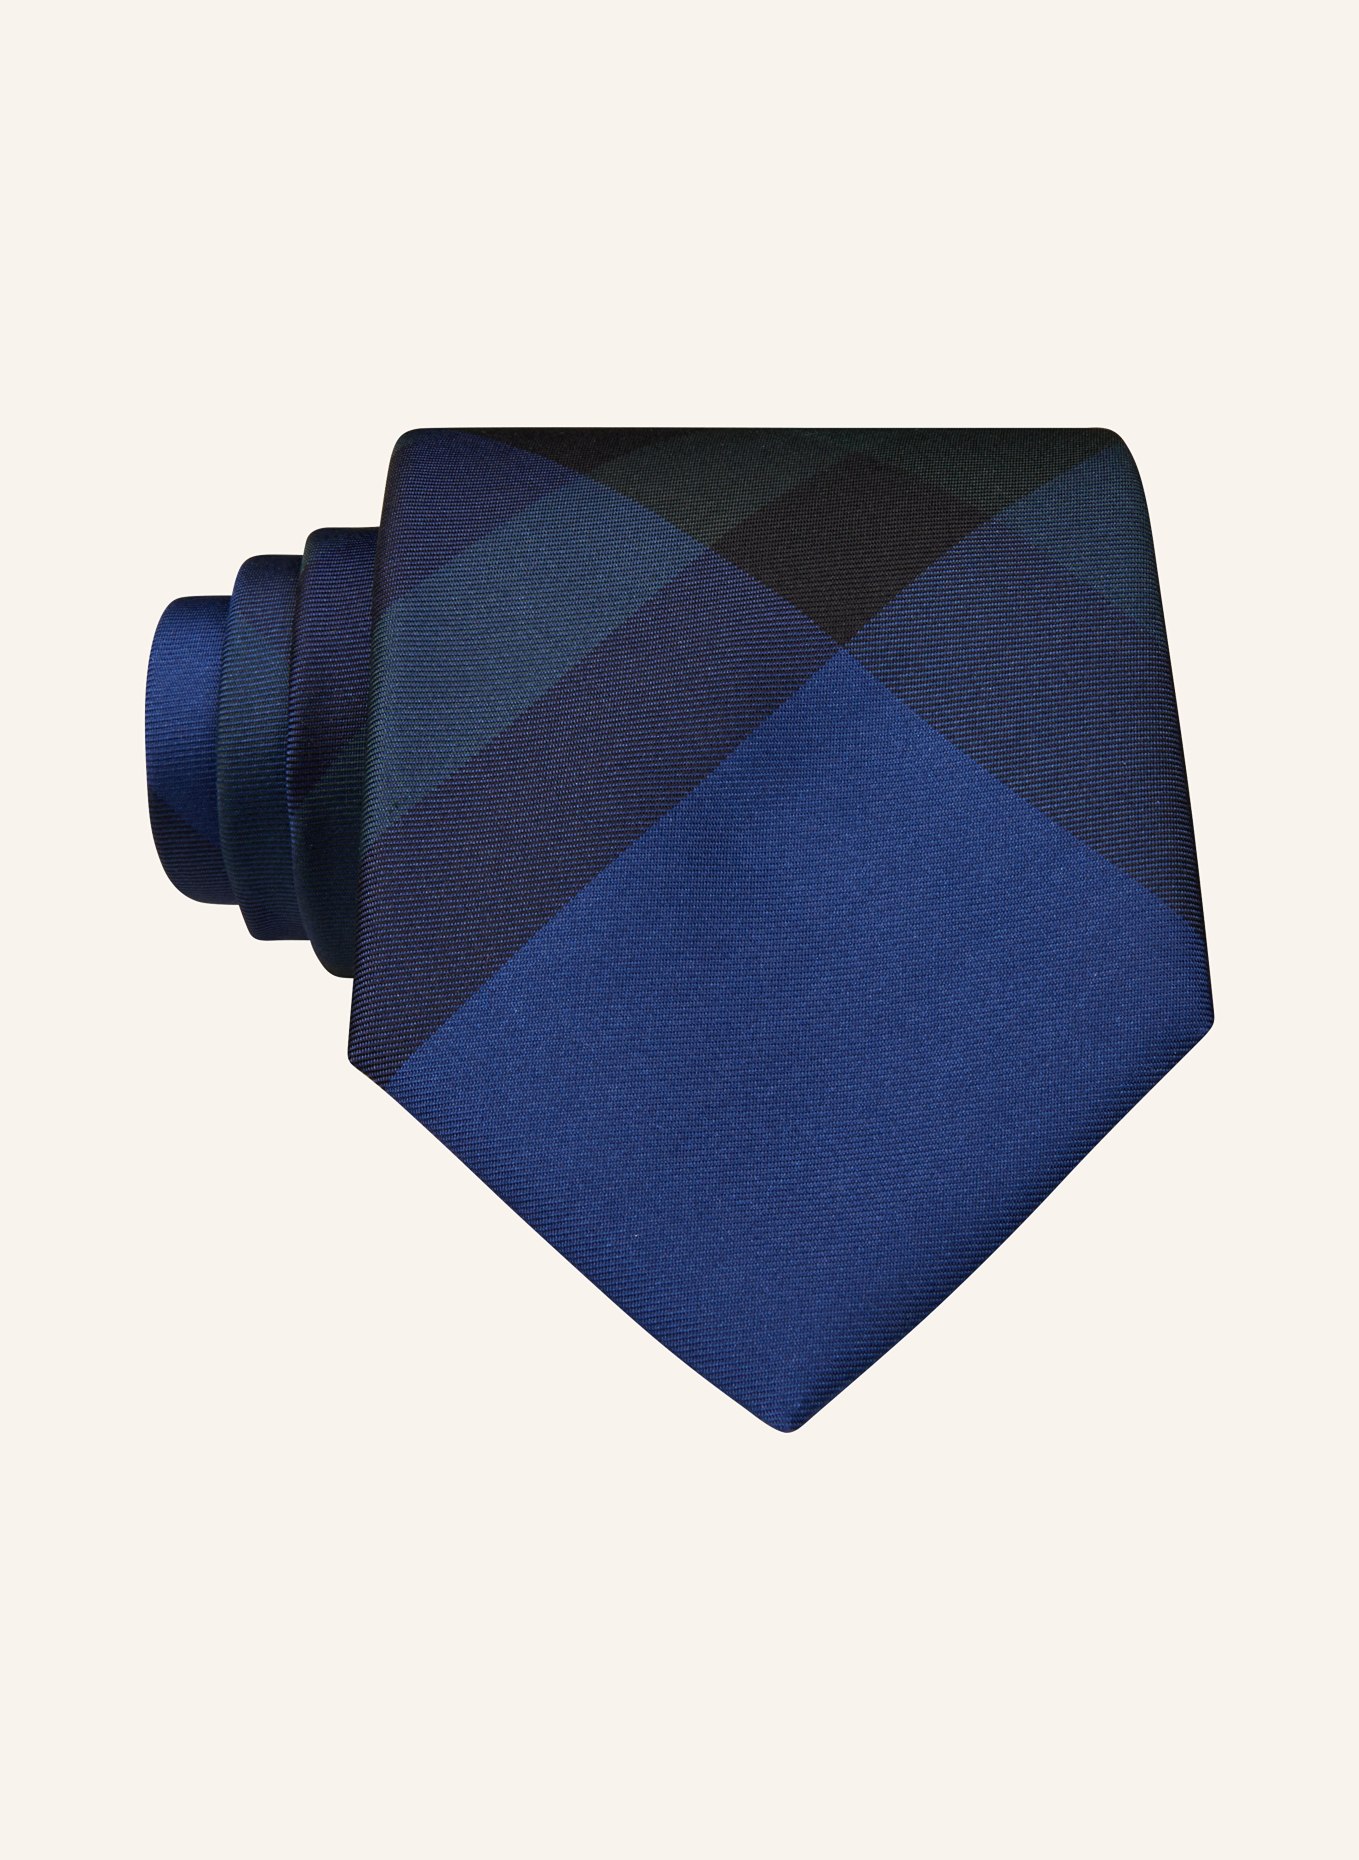 BURBERRY Krawatte MANSTON, Farbe: BLAU/ GRÜN (Bild 1)